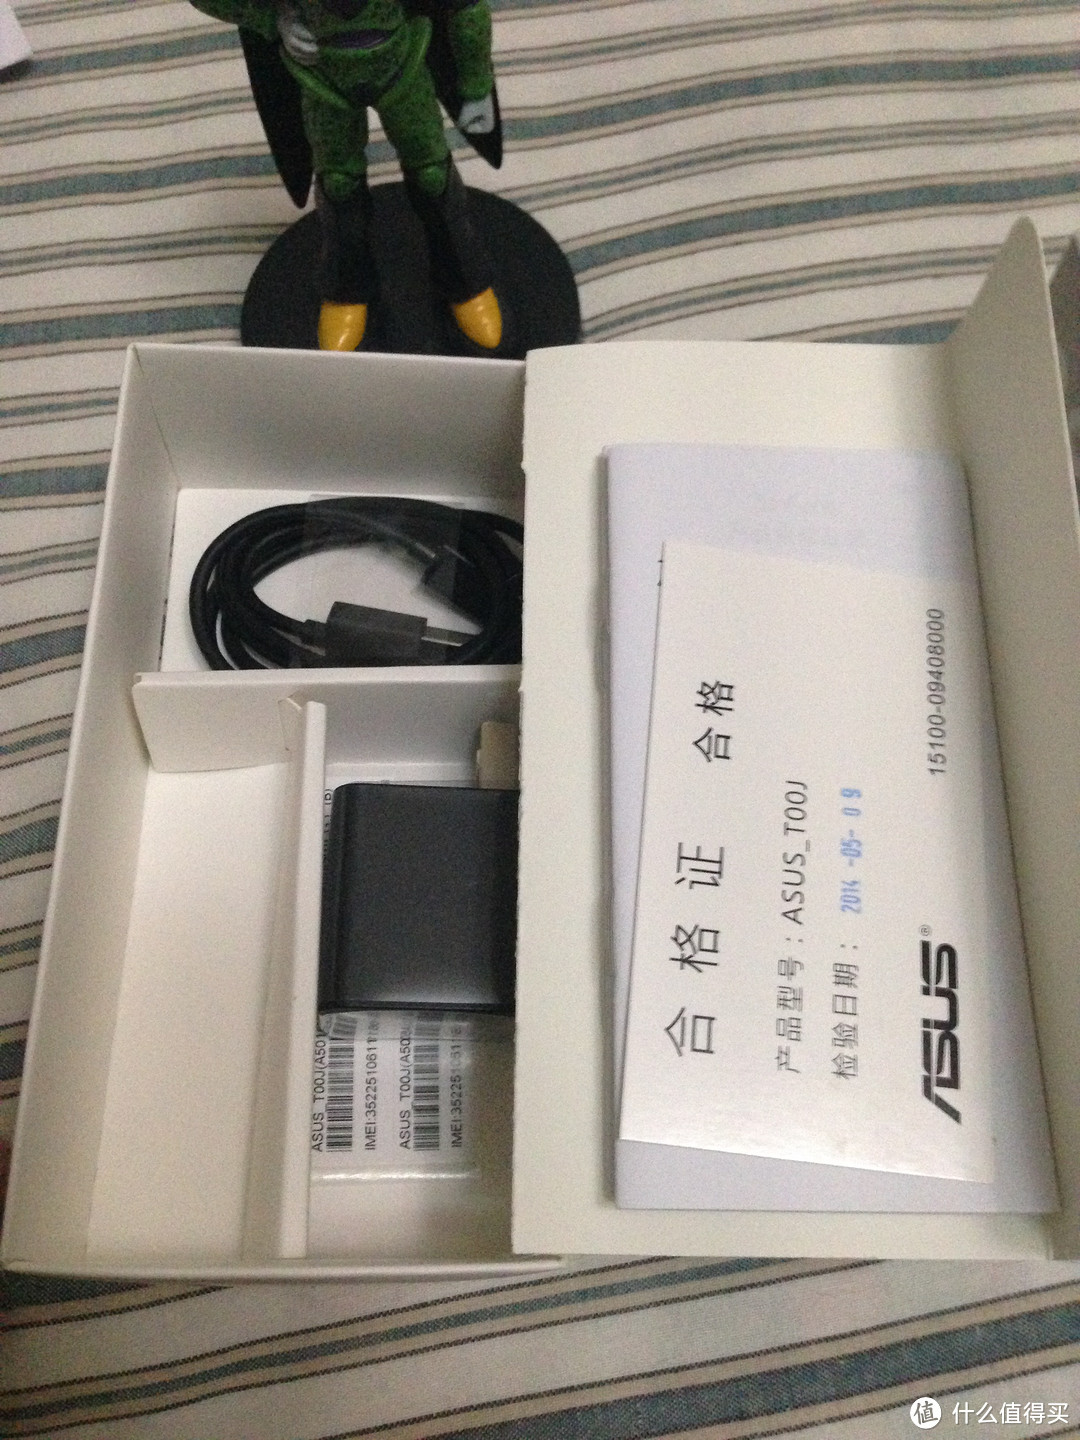 ASUS 华硕 ZenFone 5 手机 开箱测试